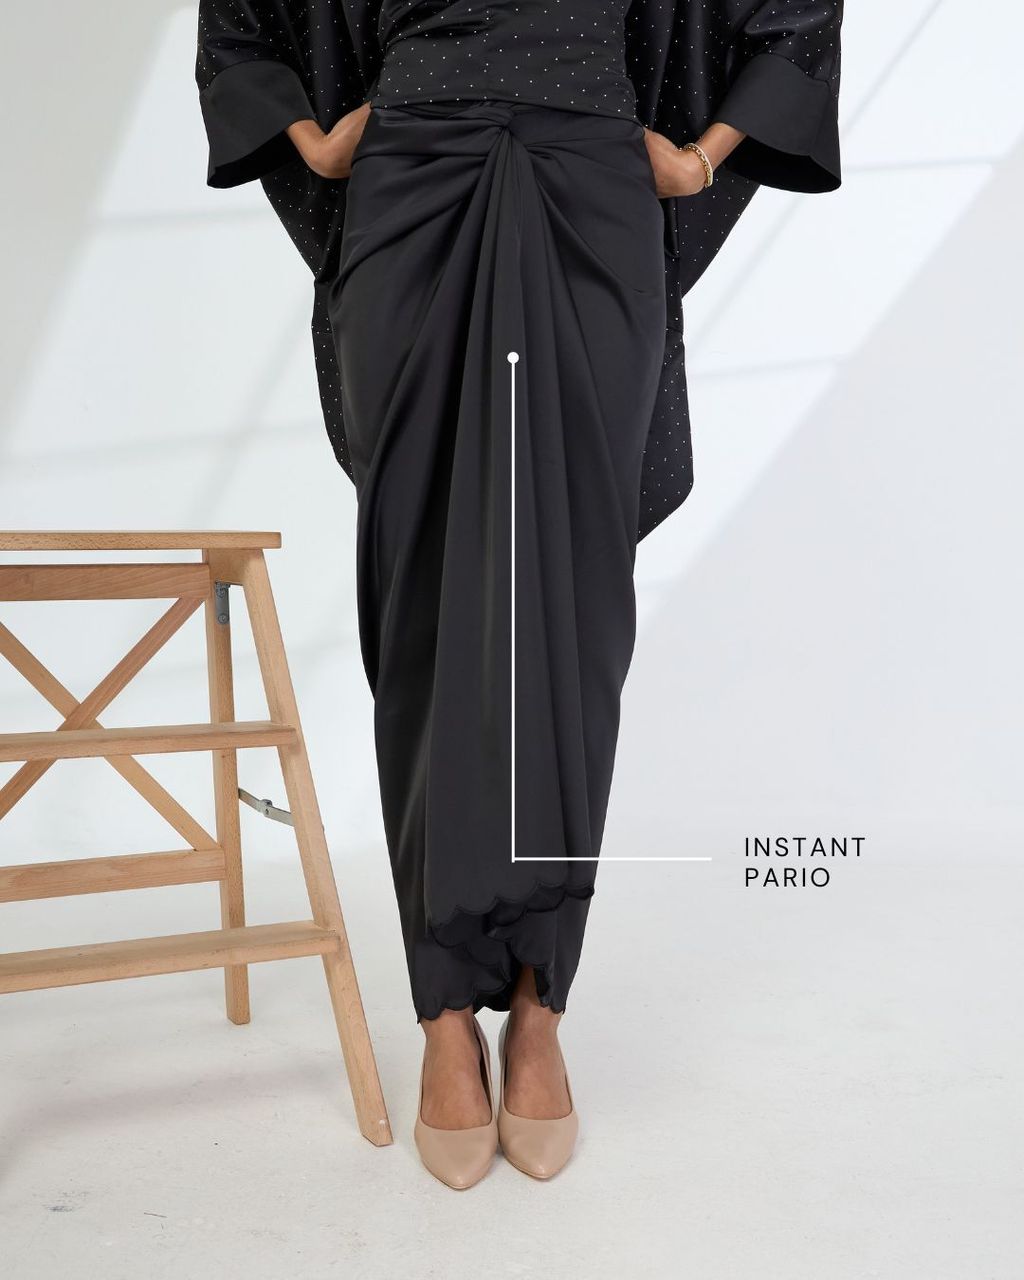 haura-wear-hawwa-skirt-set-sulam-embroidery-pario-klasik-tradisional-mini kebaya-fabrik eyelet-raya-muslimah-long-sleeve-baju-skirt-kain-perempuan-baju-sepasang (27)